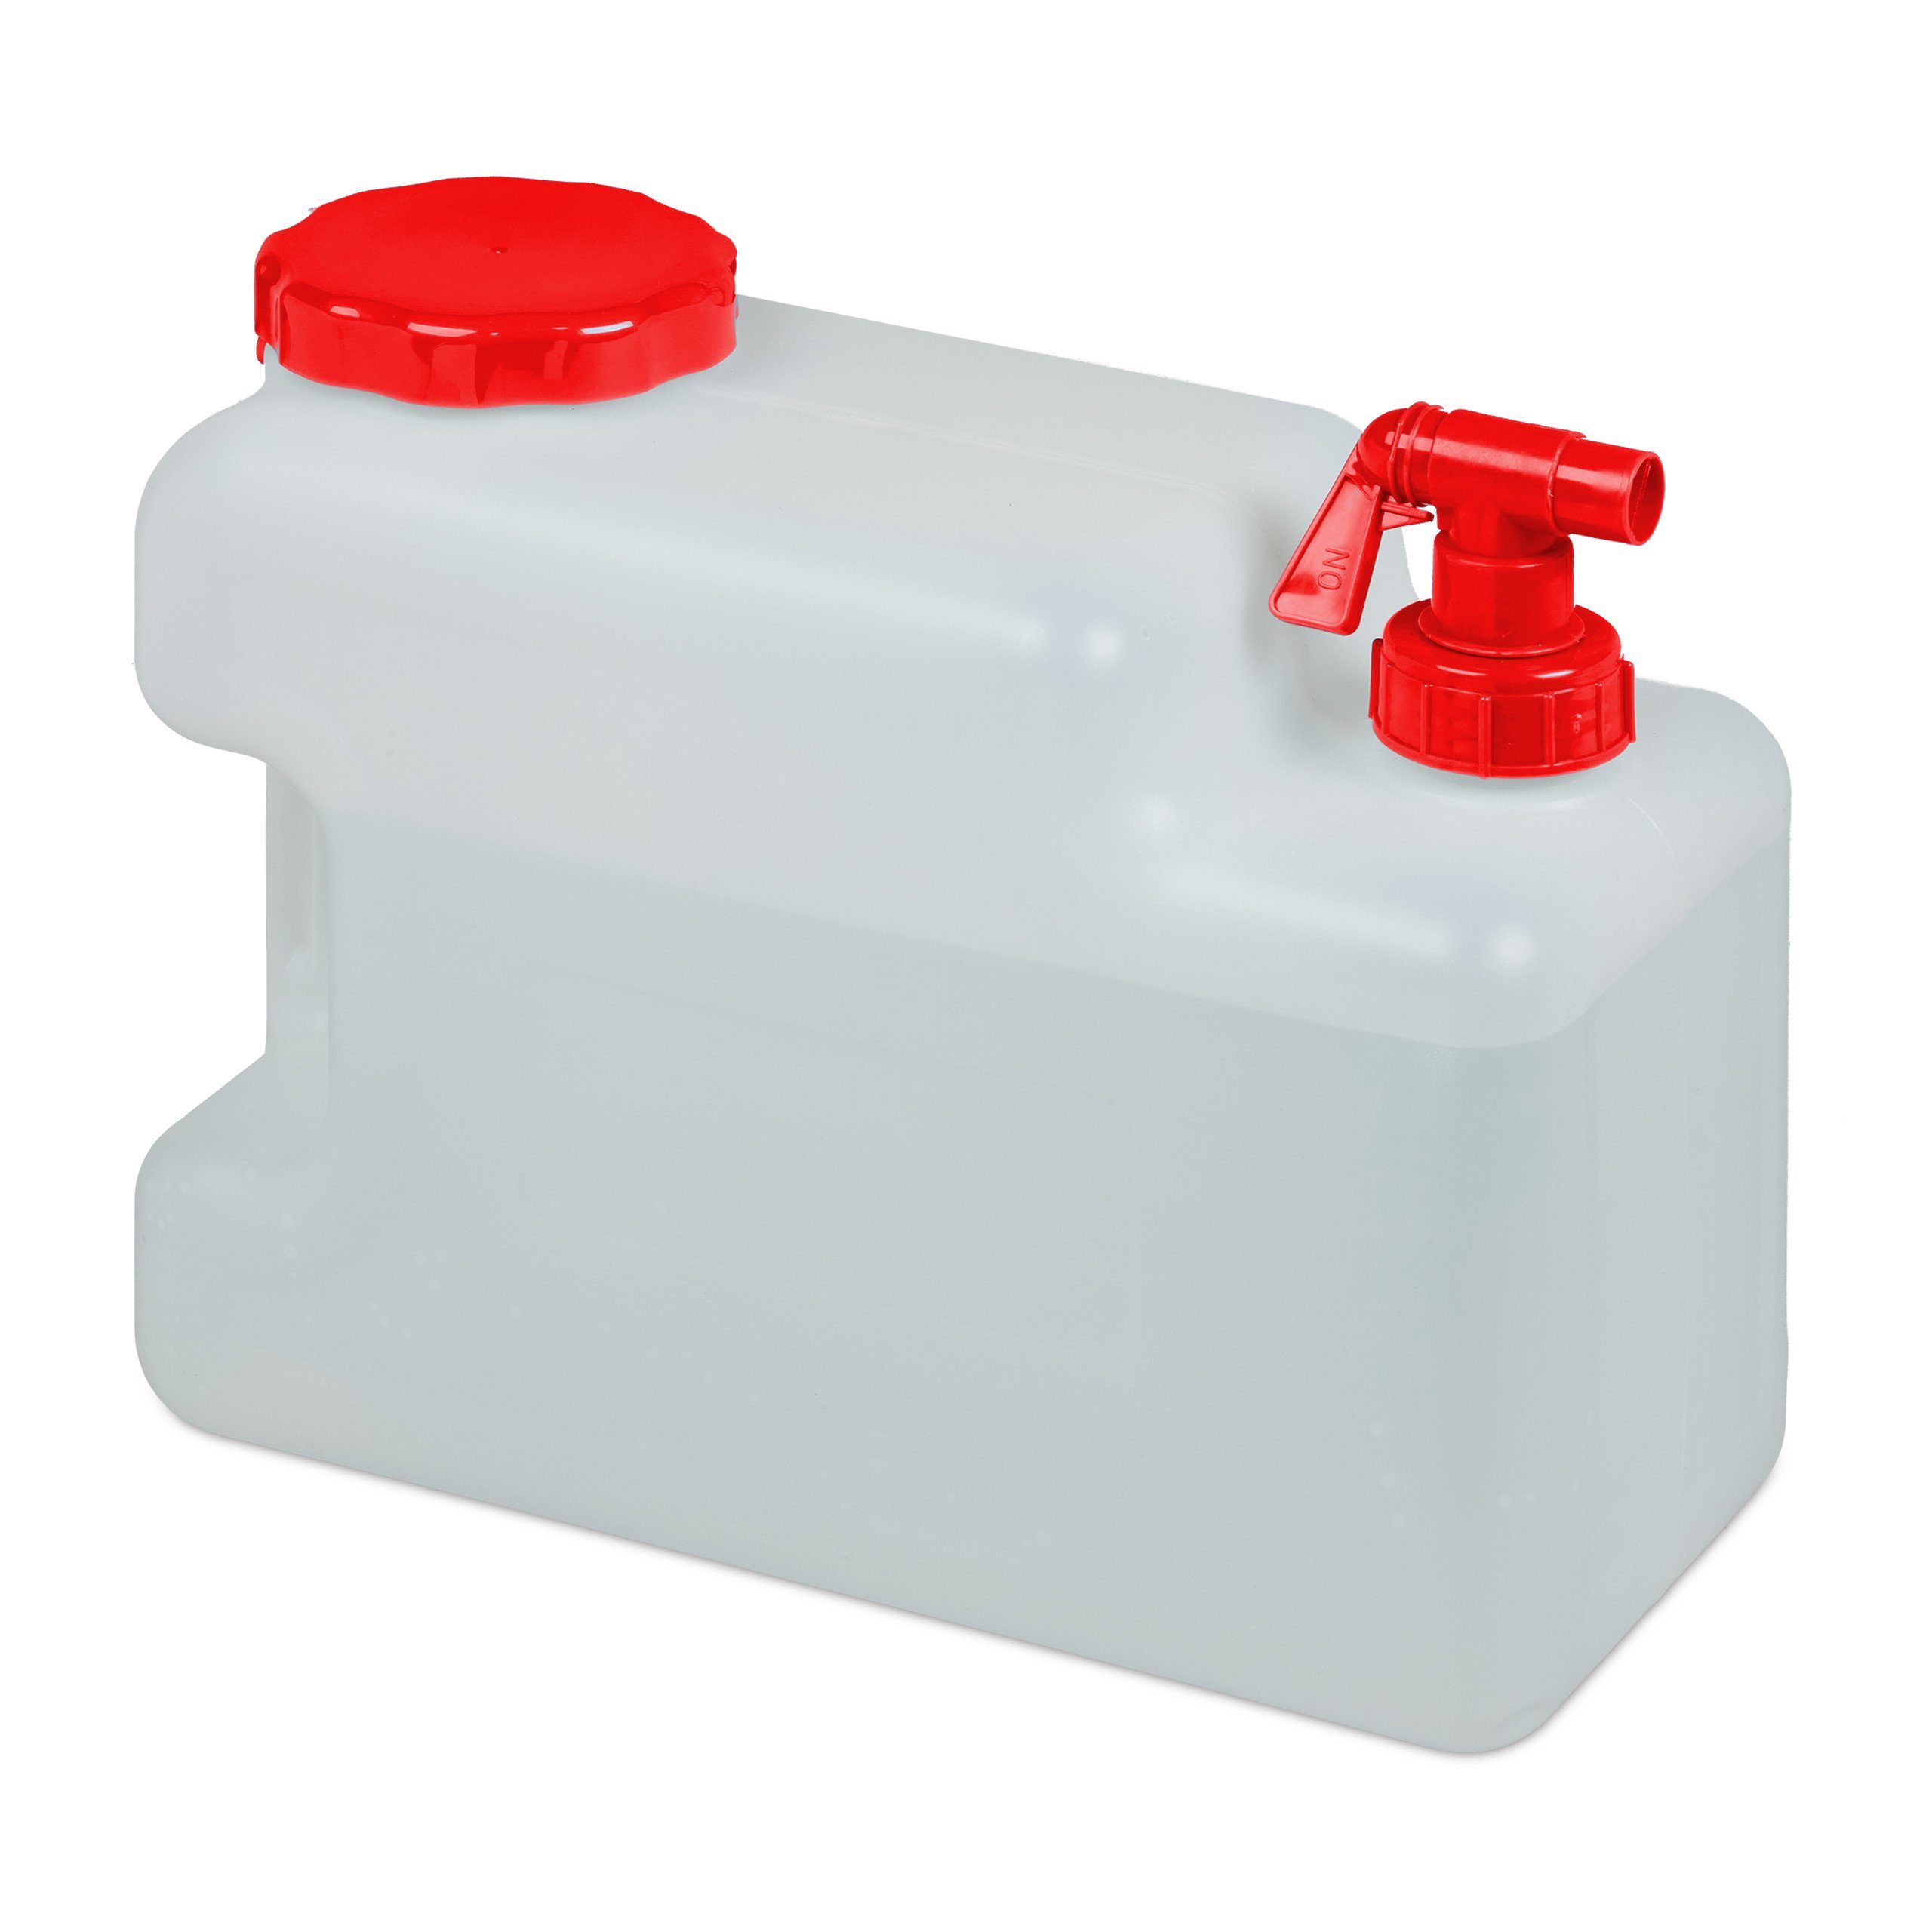 Hahn, relaxdays Wasserkanister 12 Liter Kanister mit